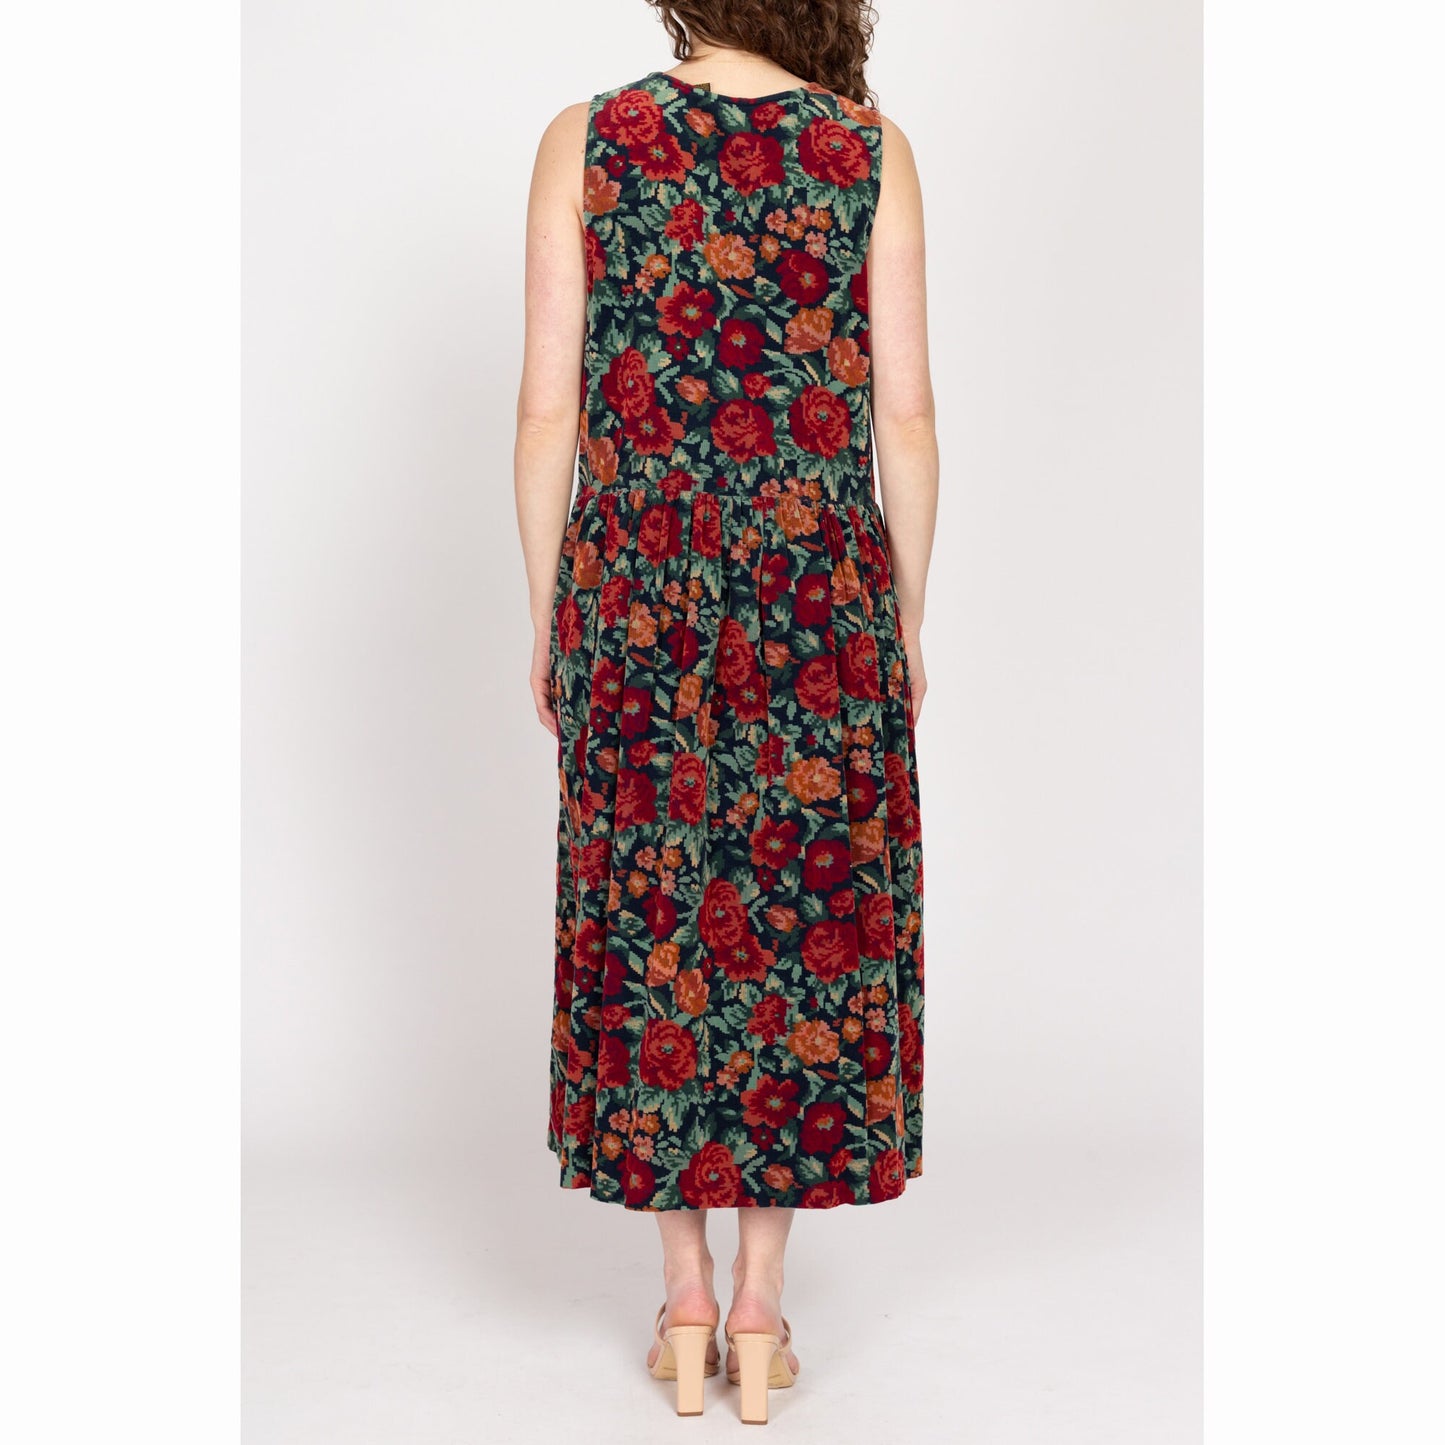 Medium 80s 8-Bit Floral Corduroy Pinafore Dress | Vintage Eddie Bauer Blue Red Cotton Sleeveless Maxi Jumper Dress